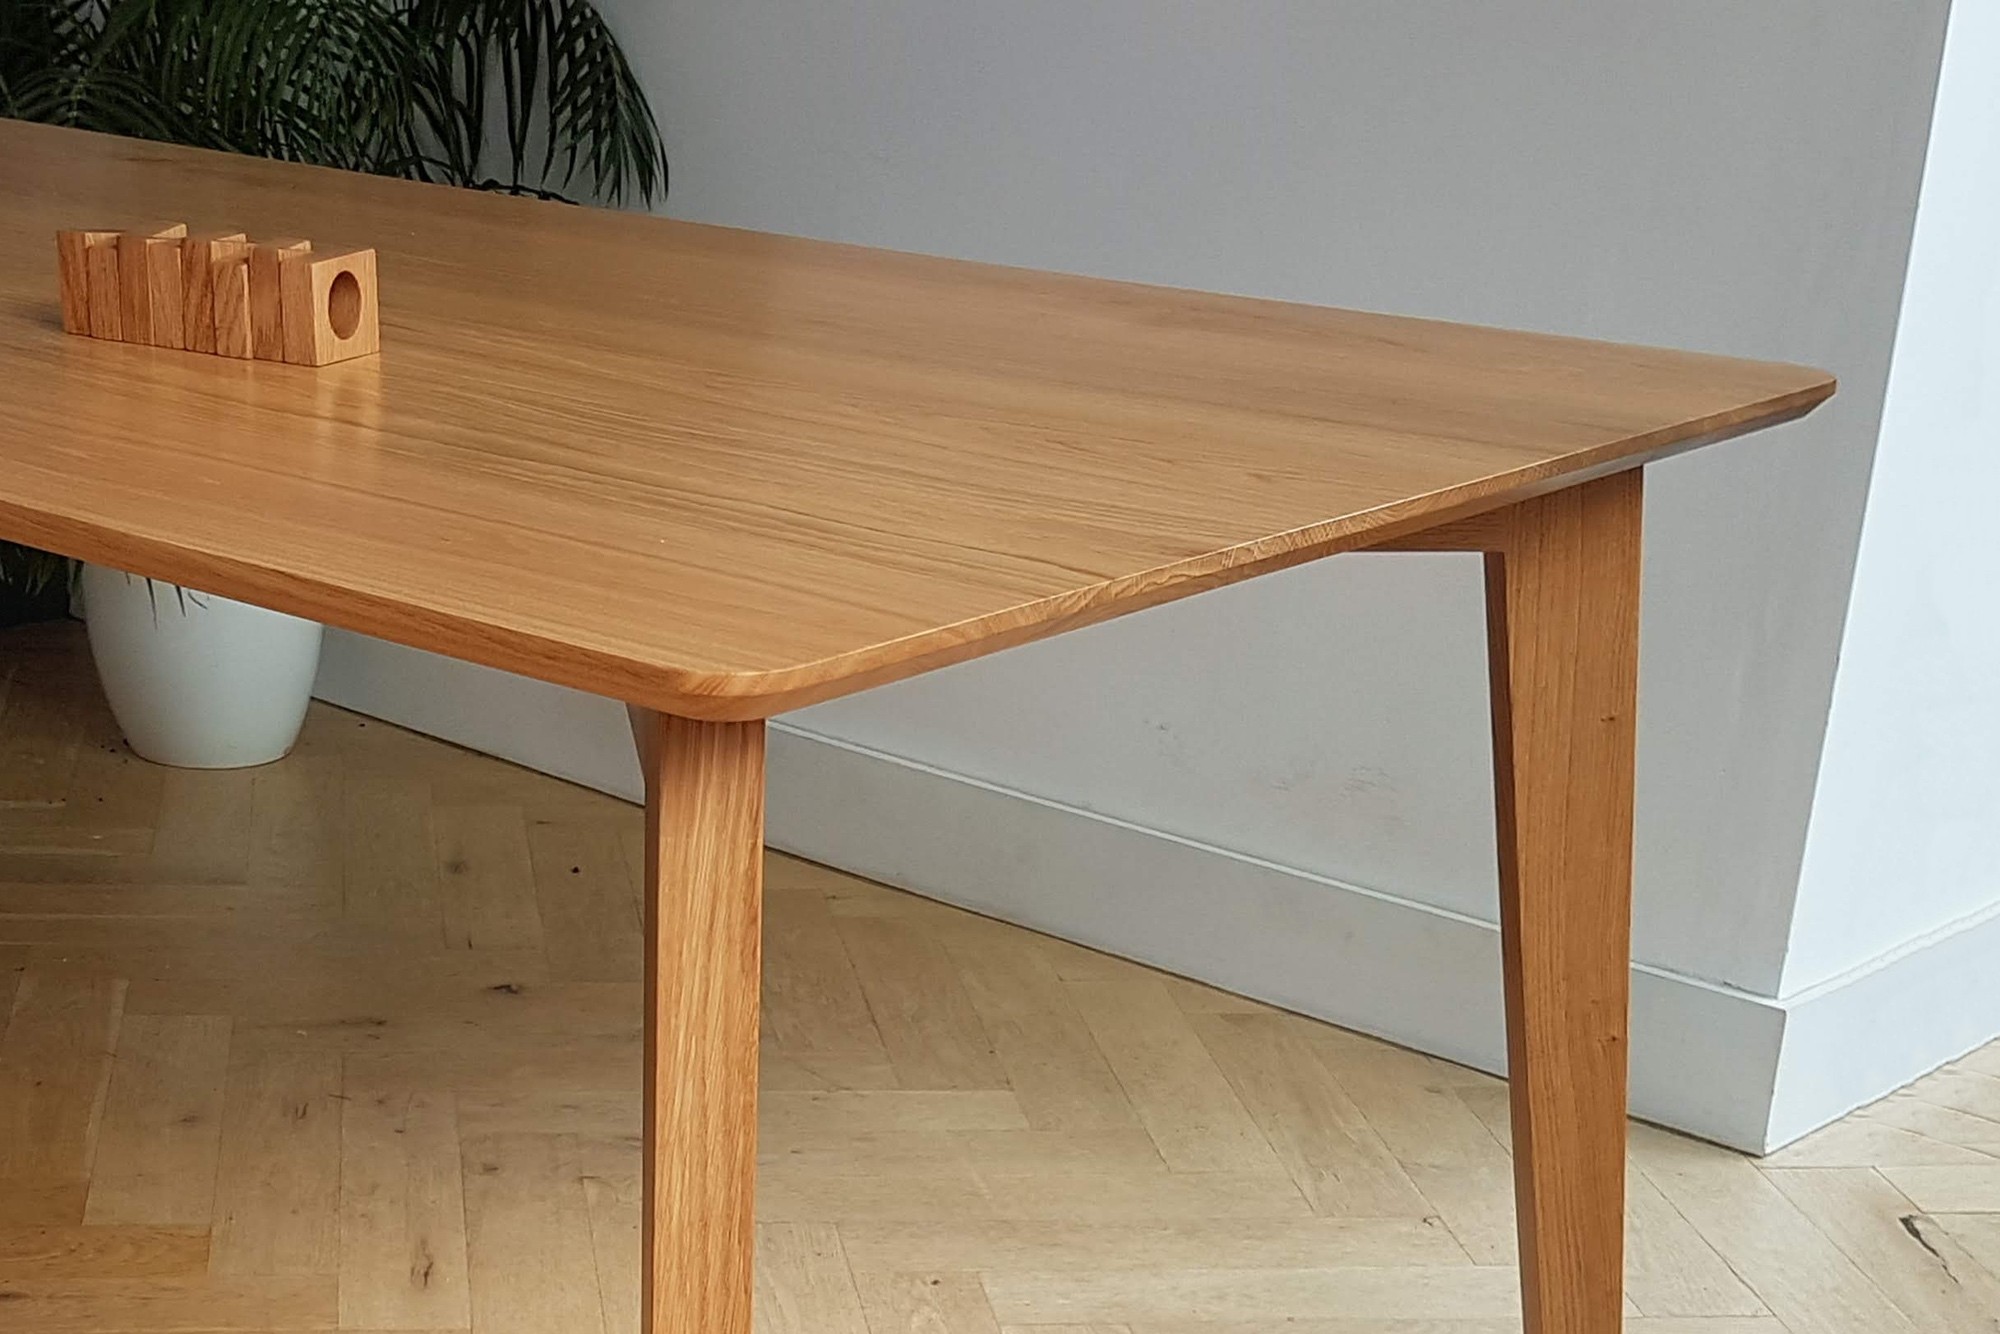 https://ibanhamfurniture.co.uk/wp-content/uploads/2021/08/Handmade-Oak-Dining-Table-with-chamfered-edge-detail.jpg